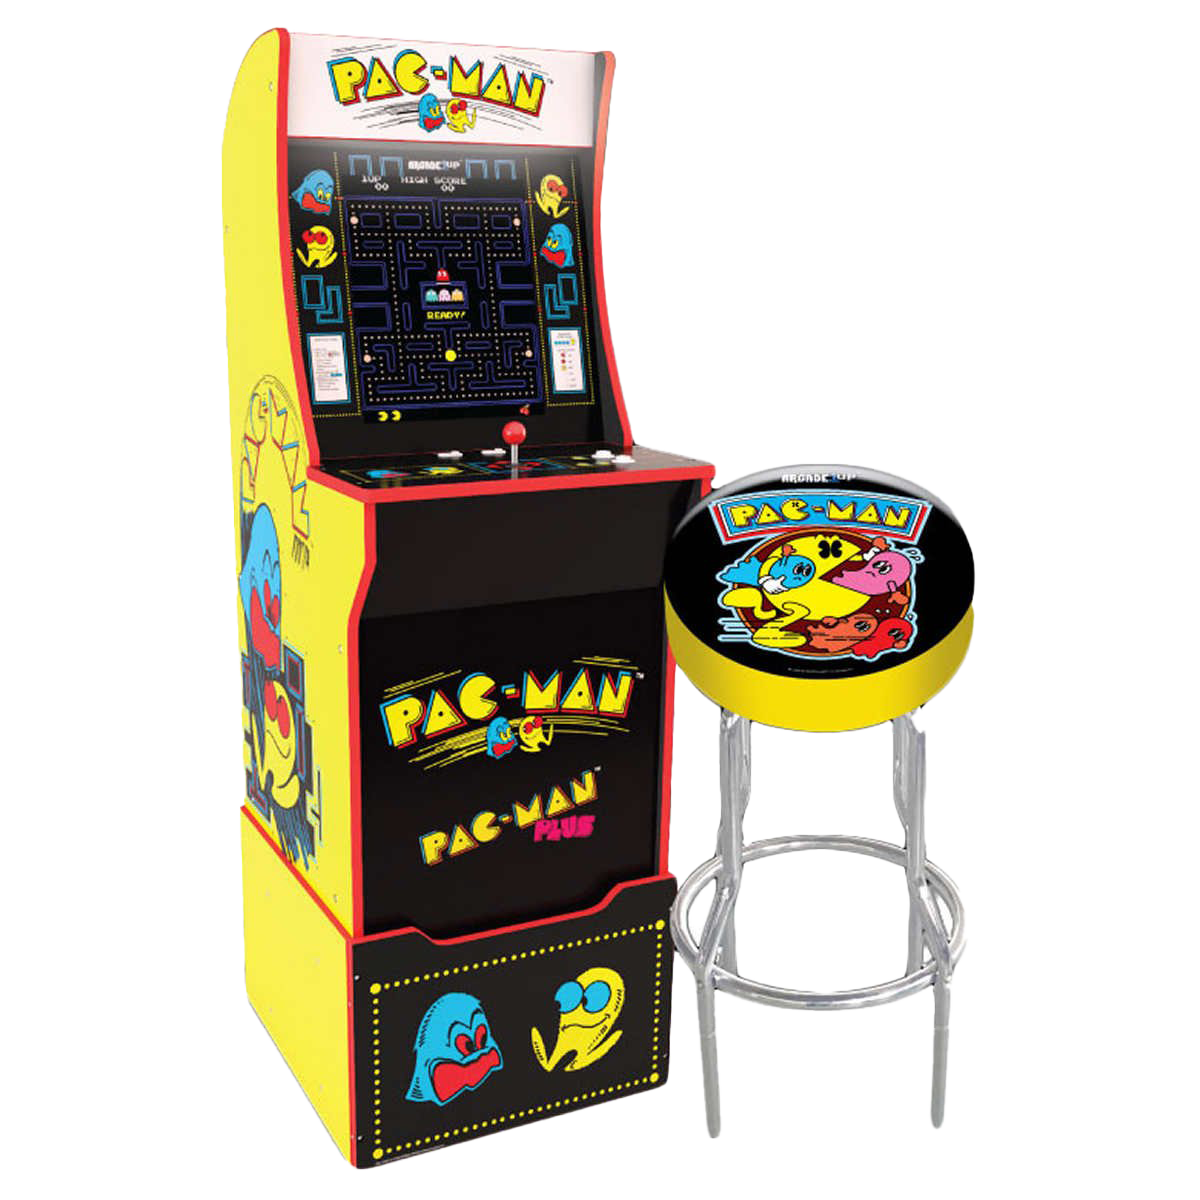 Machine Game Pic Arcade Free Download PNG HD PNG Image